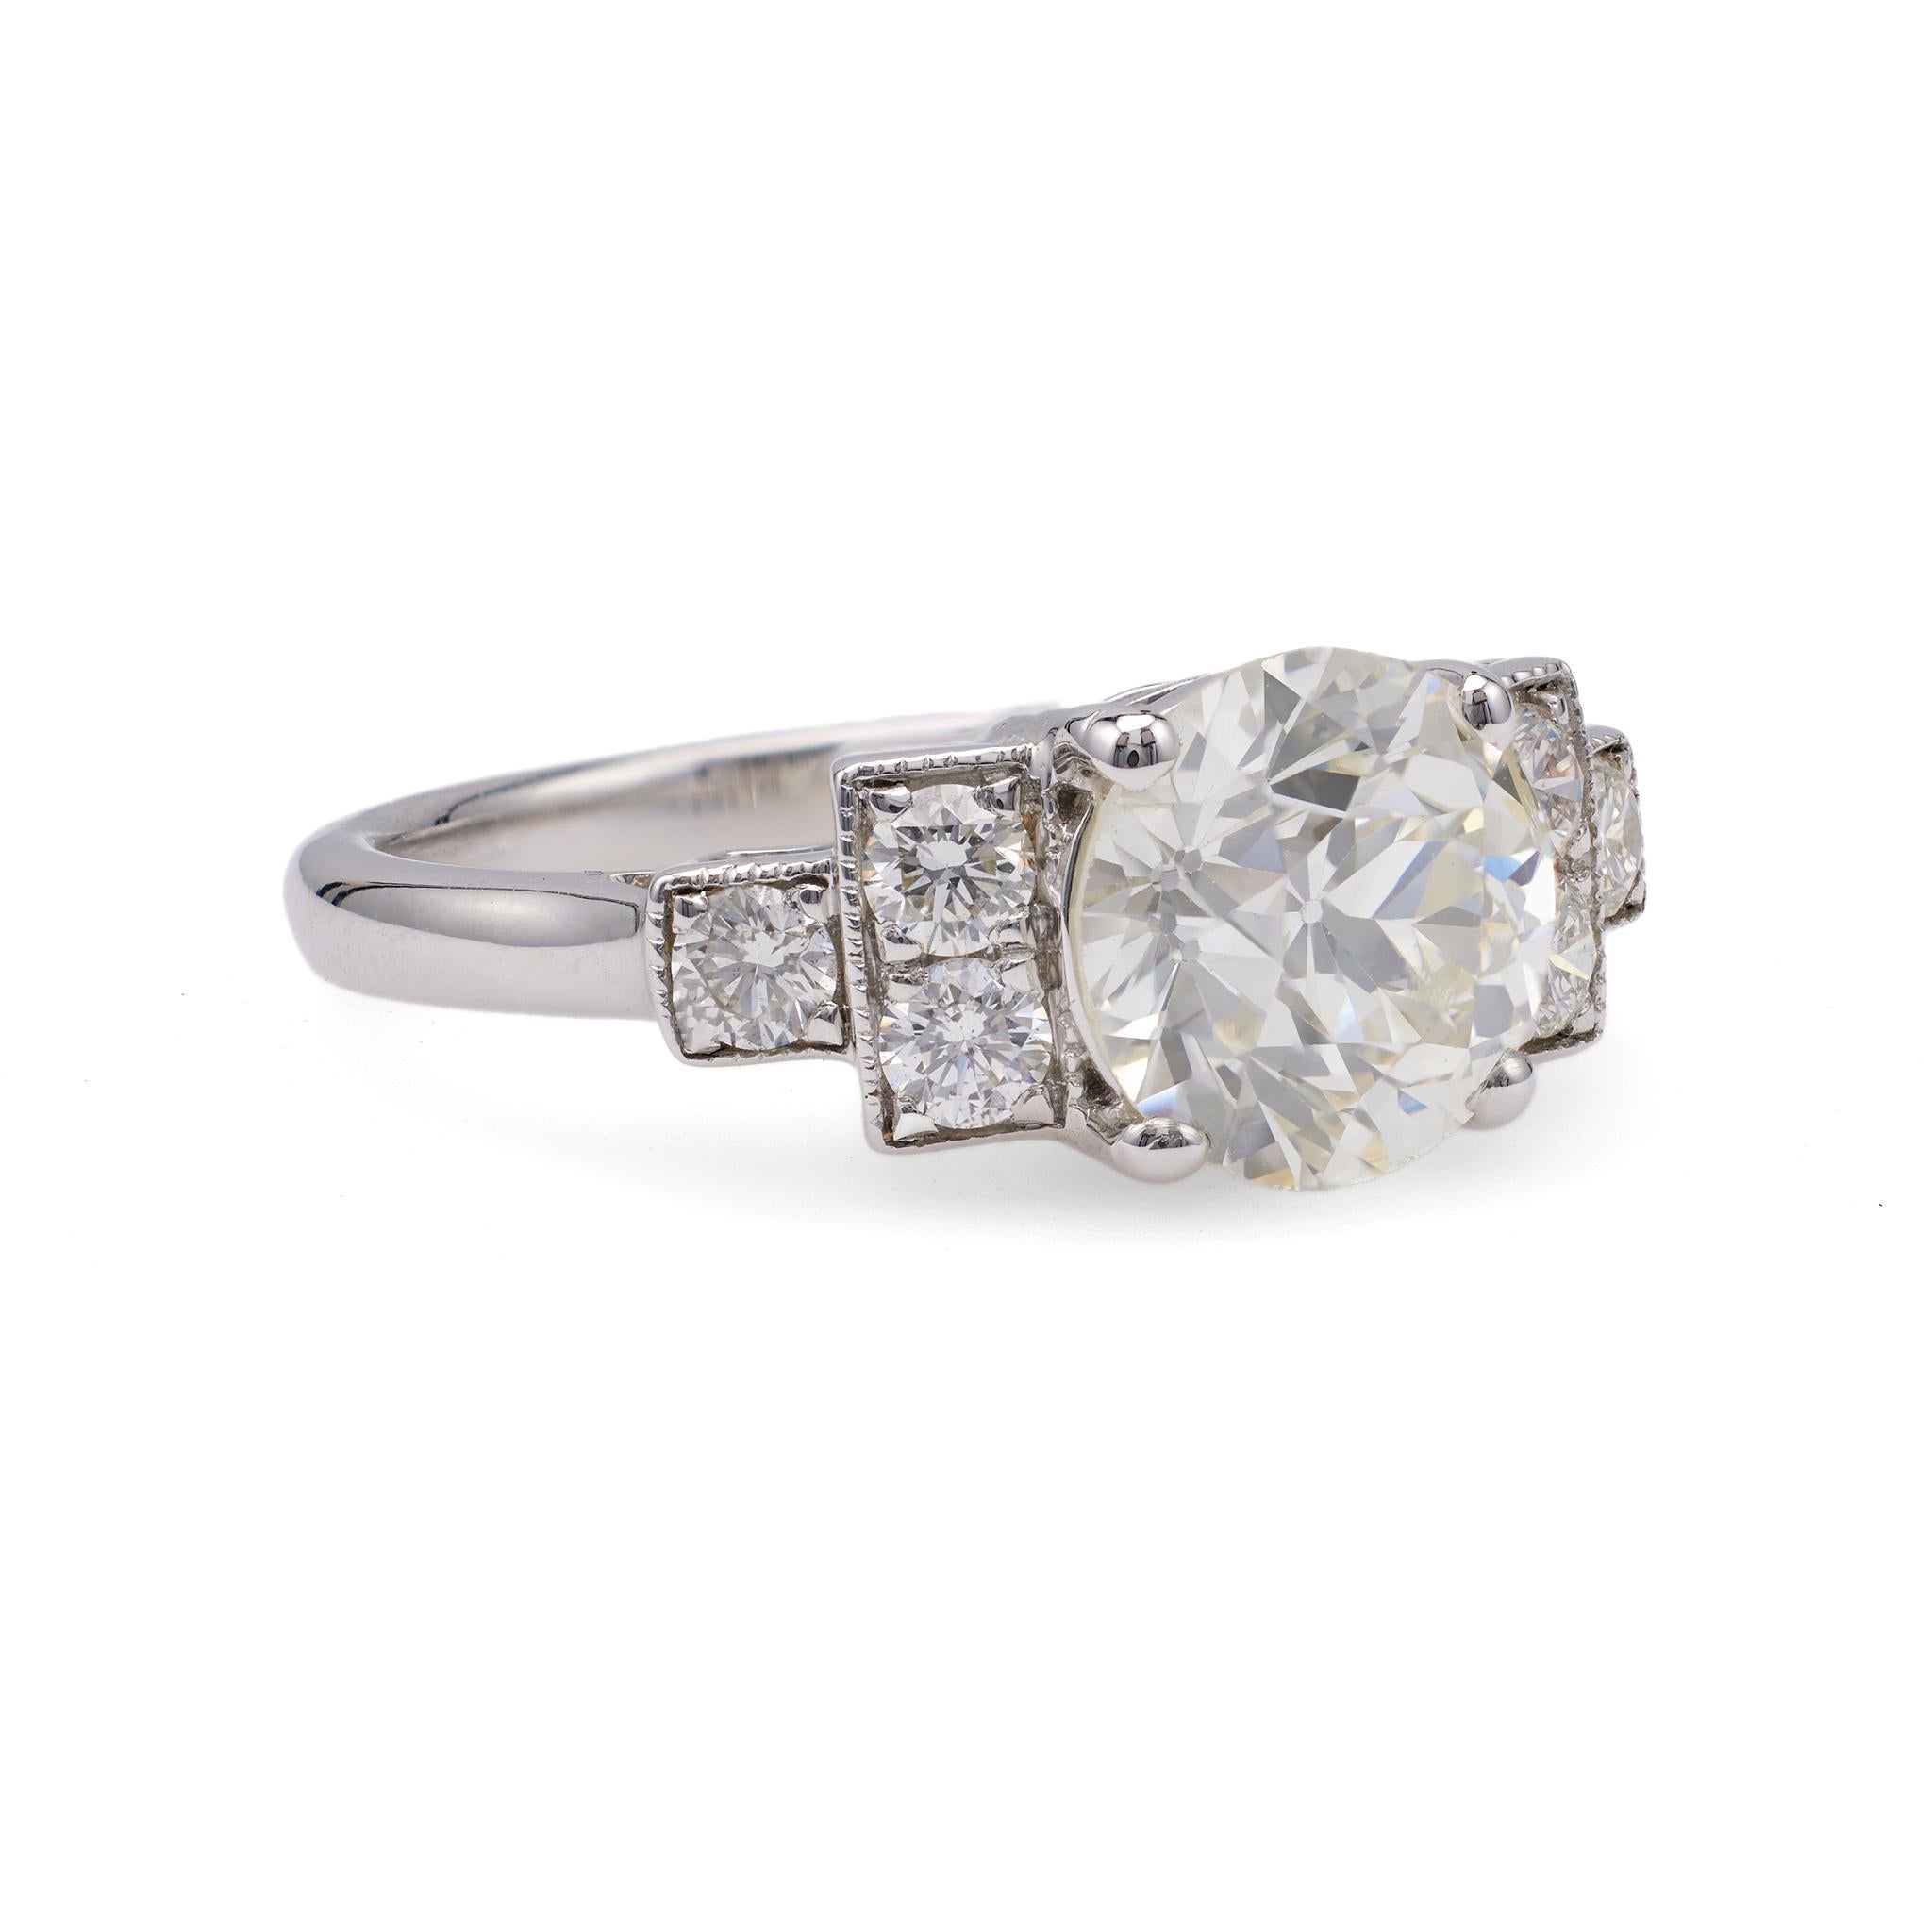 Women's or Men's Art Deco Inspired GIA 2.21 Carat Old European Cut Diamond 18k White Gold Ring